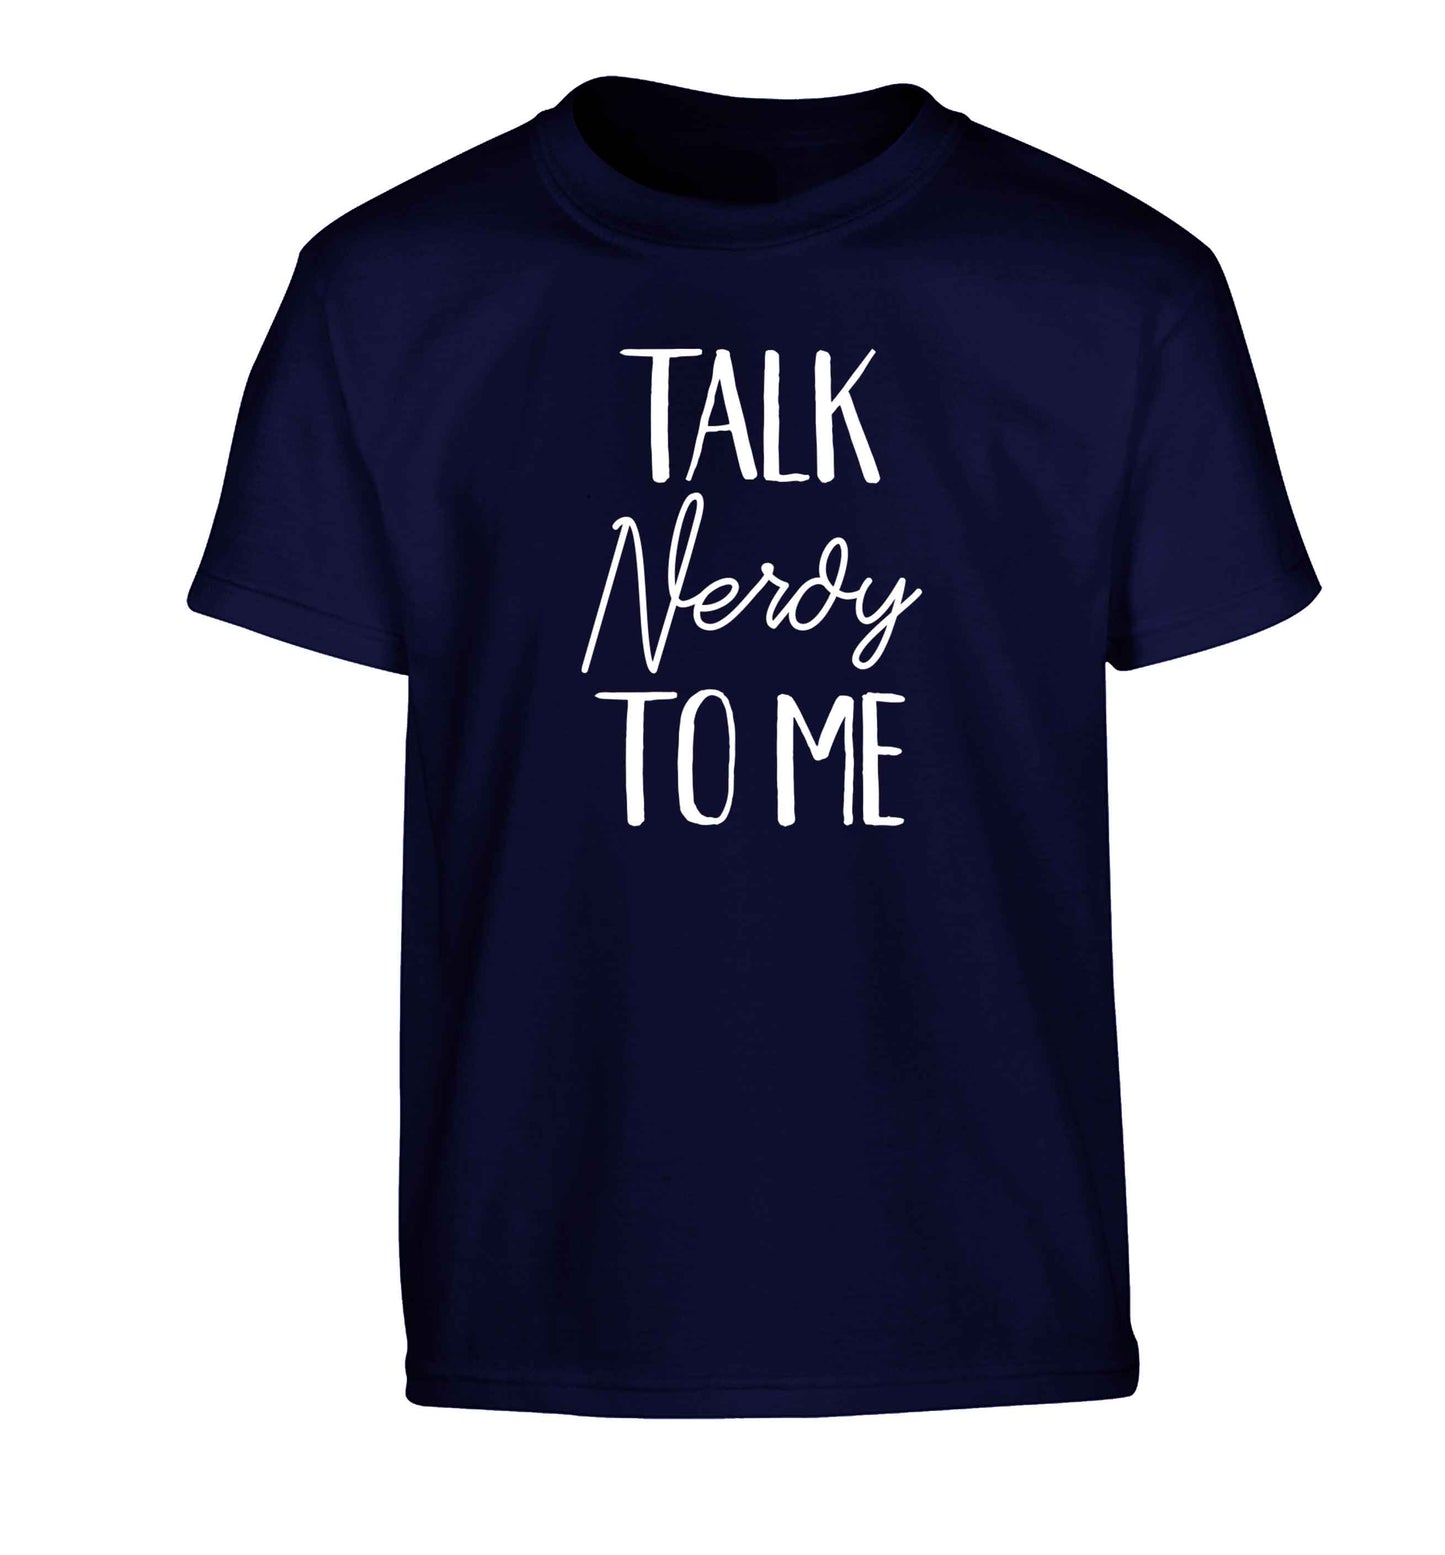 Talk nerdy to me Children's navy Tshirt 12-13 Years